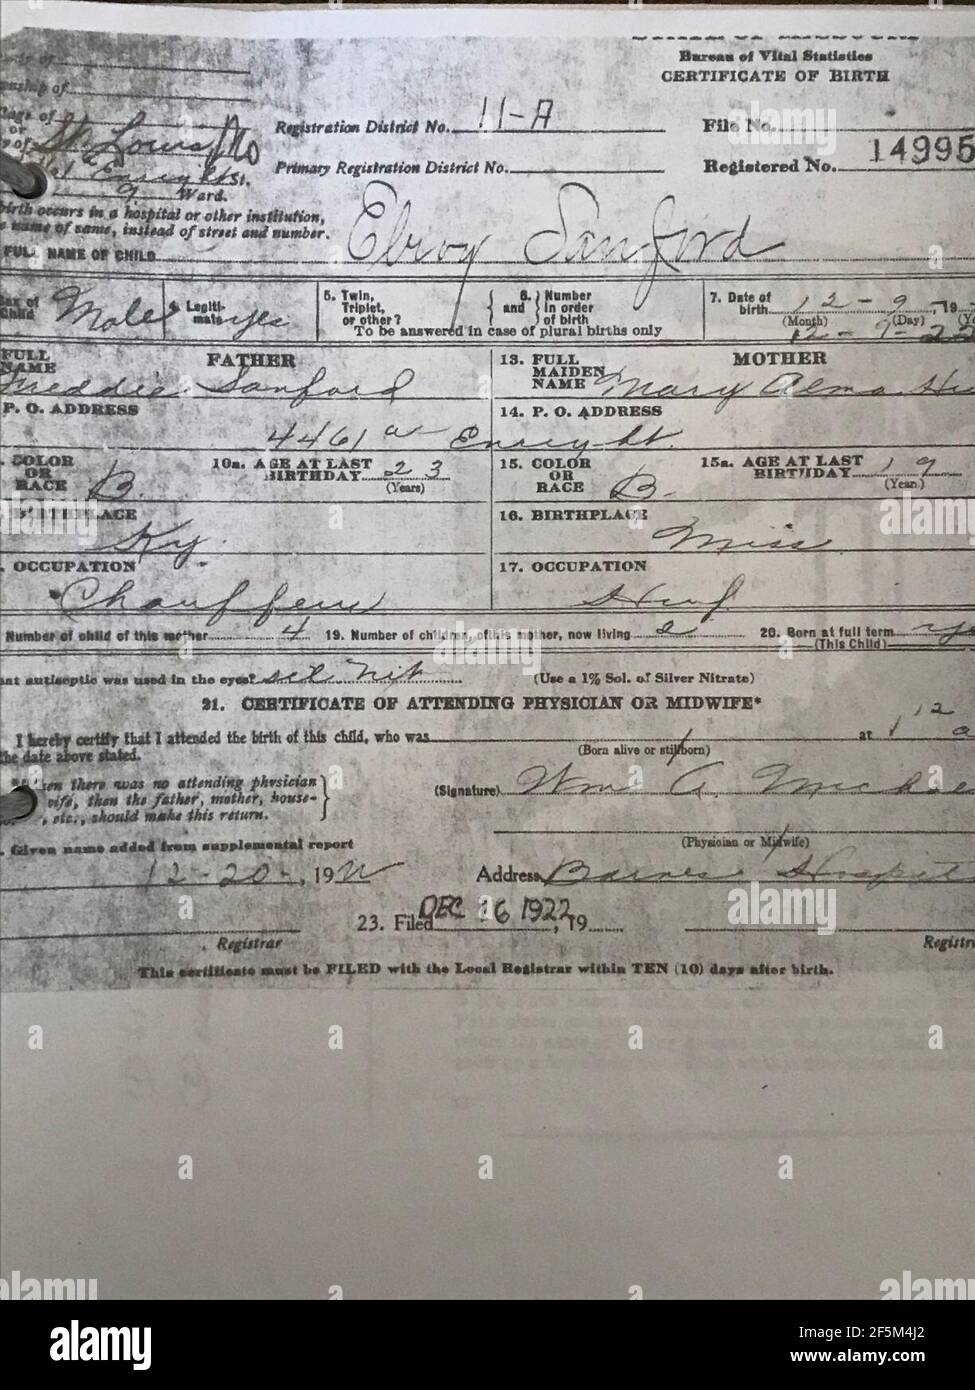 Redd Foxx 1922 Birth Certificate - View 1. Stock Photo